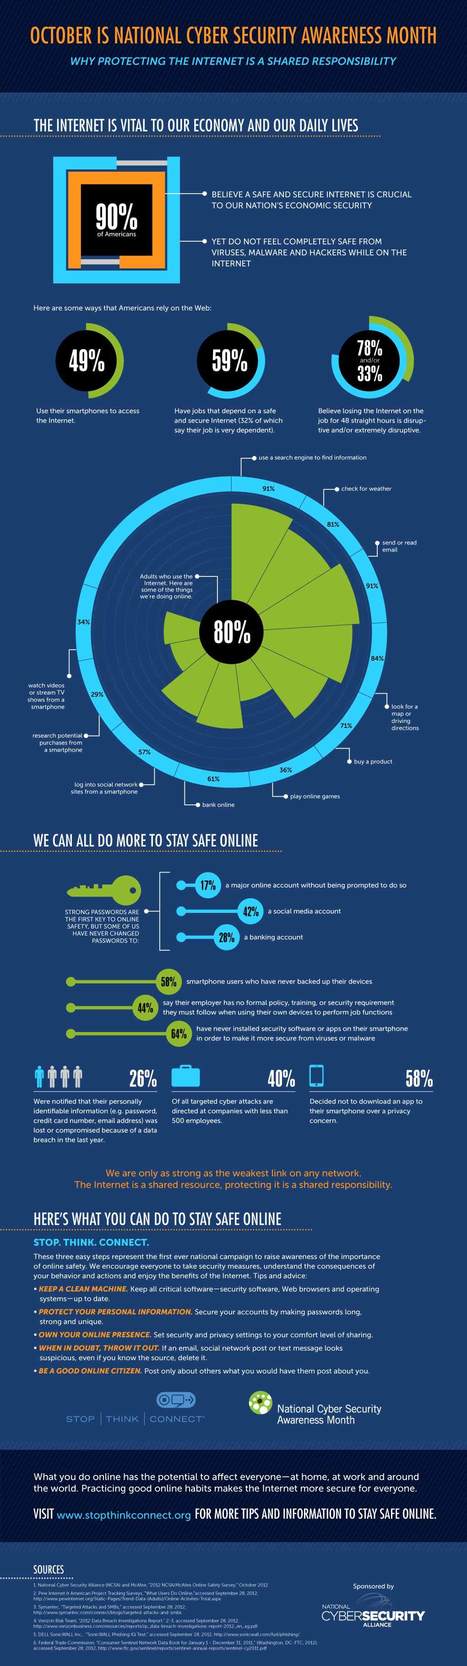 Protecting the Internet Infographic | StaySafeOnline.org | ICT Security-Sécurité PC et Internet | Scoop.it